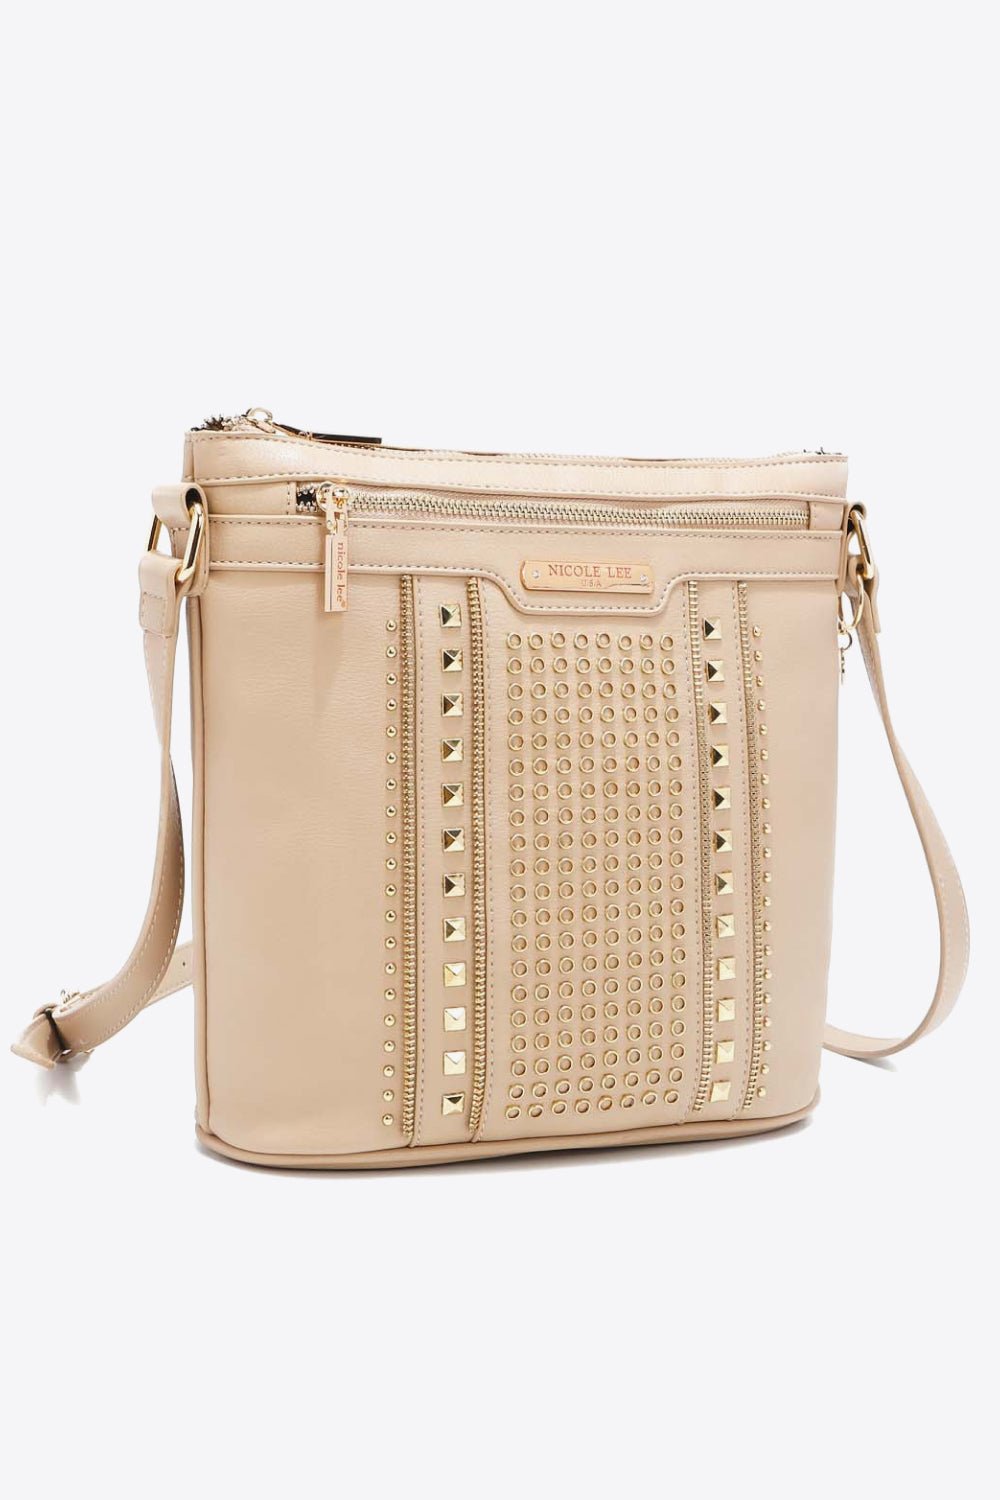 Nicole Lee USA Love Handbag - pvmark